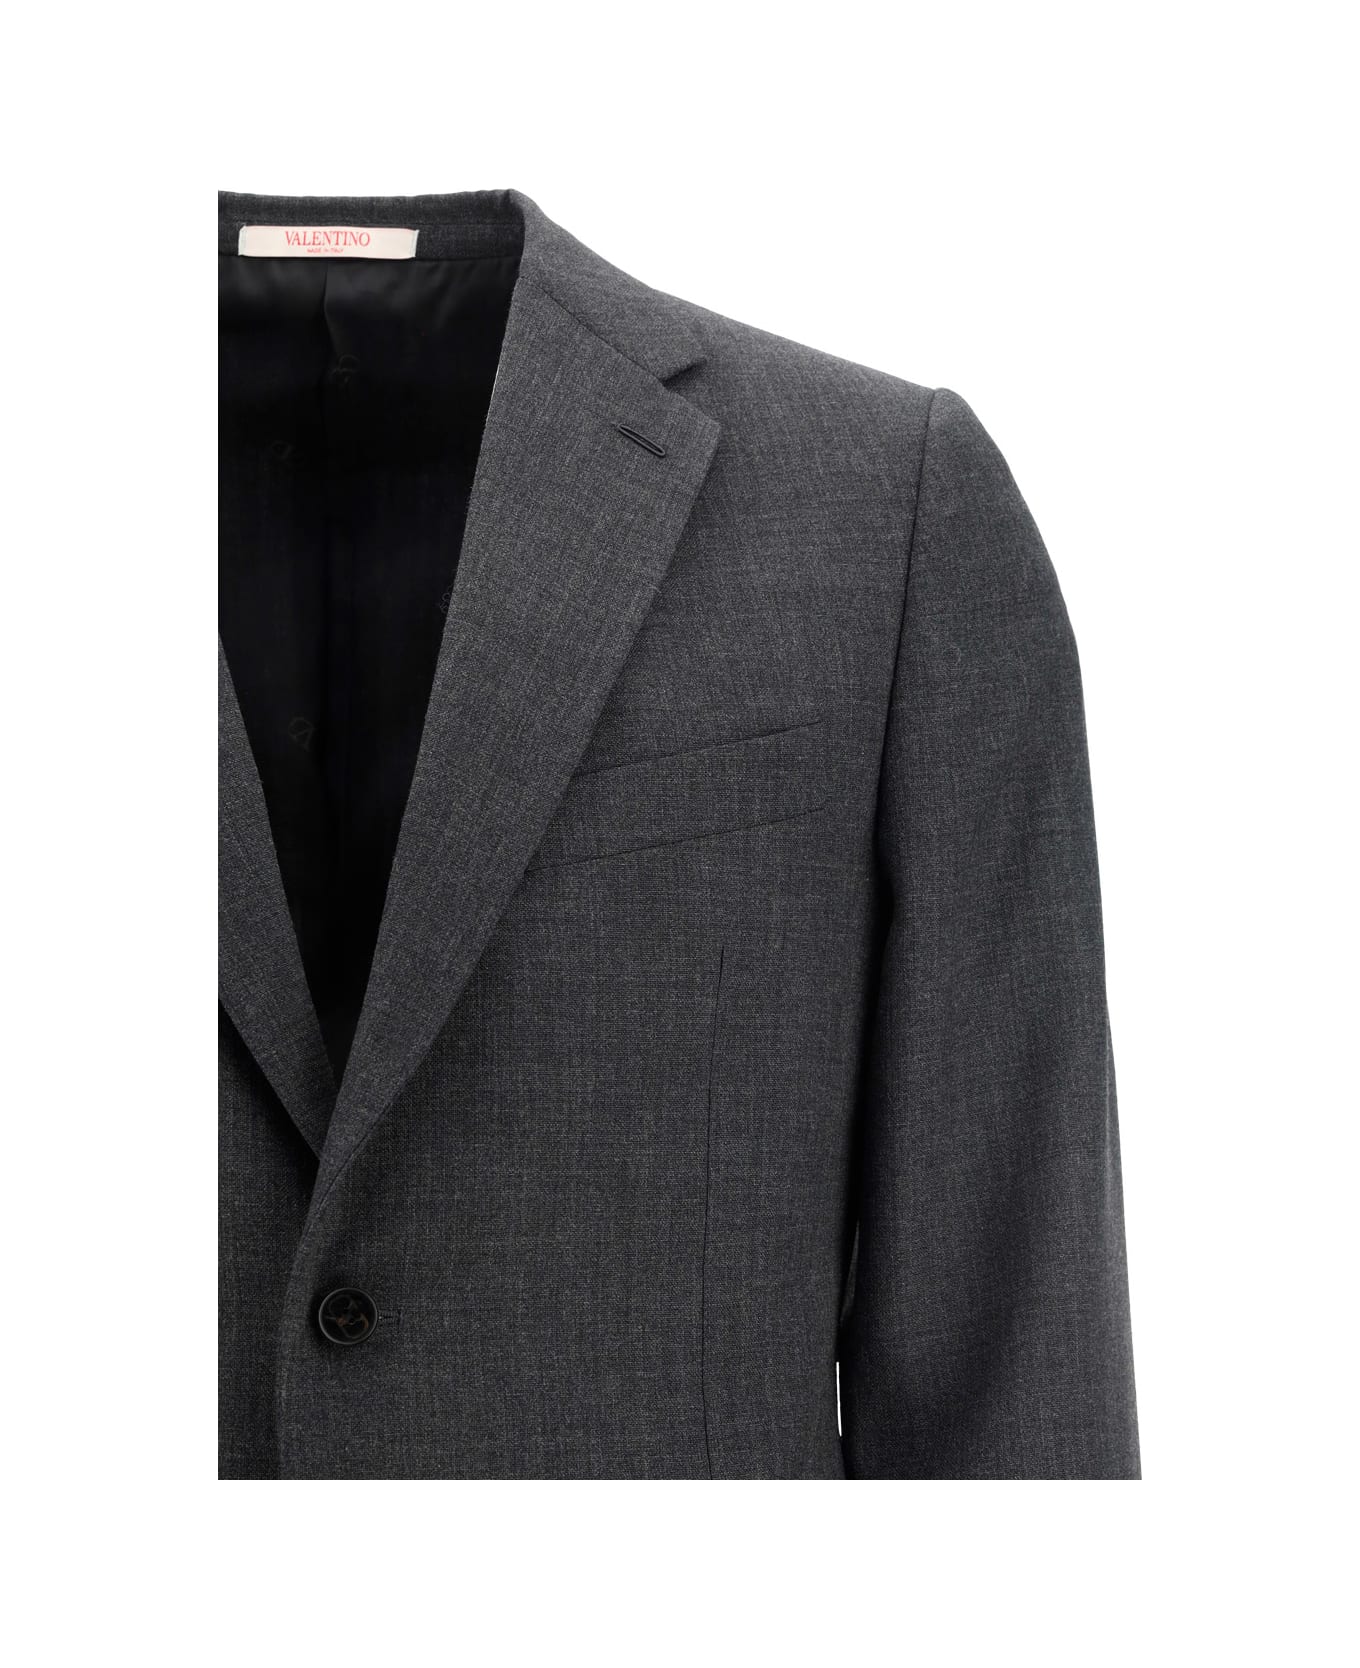 Valentino Complete Suit - Antracite